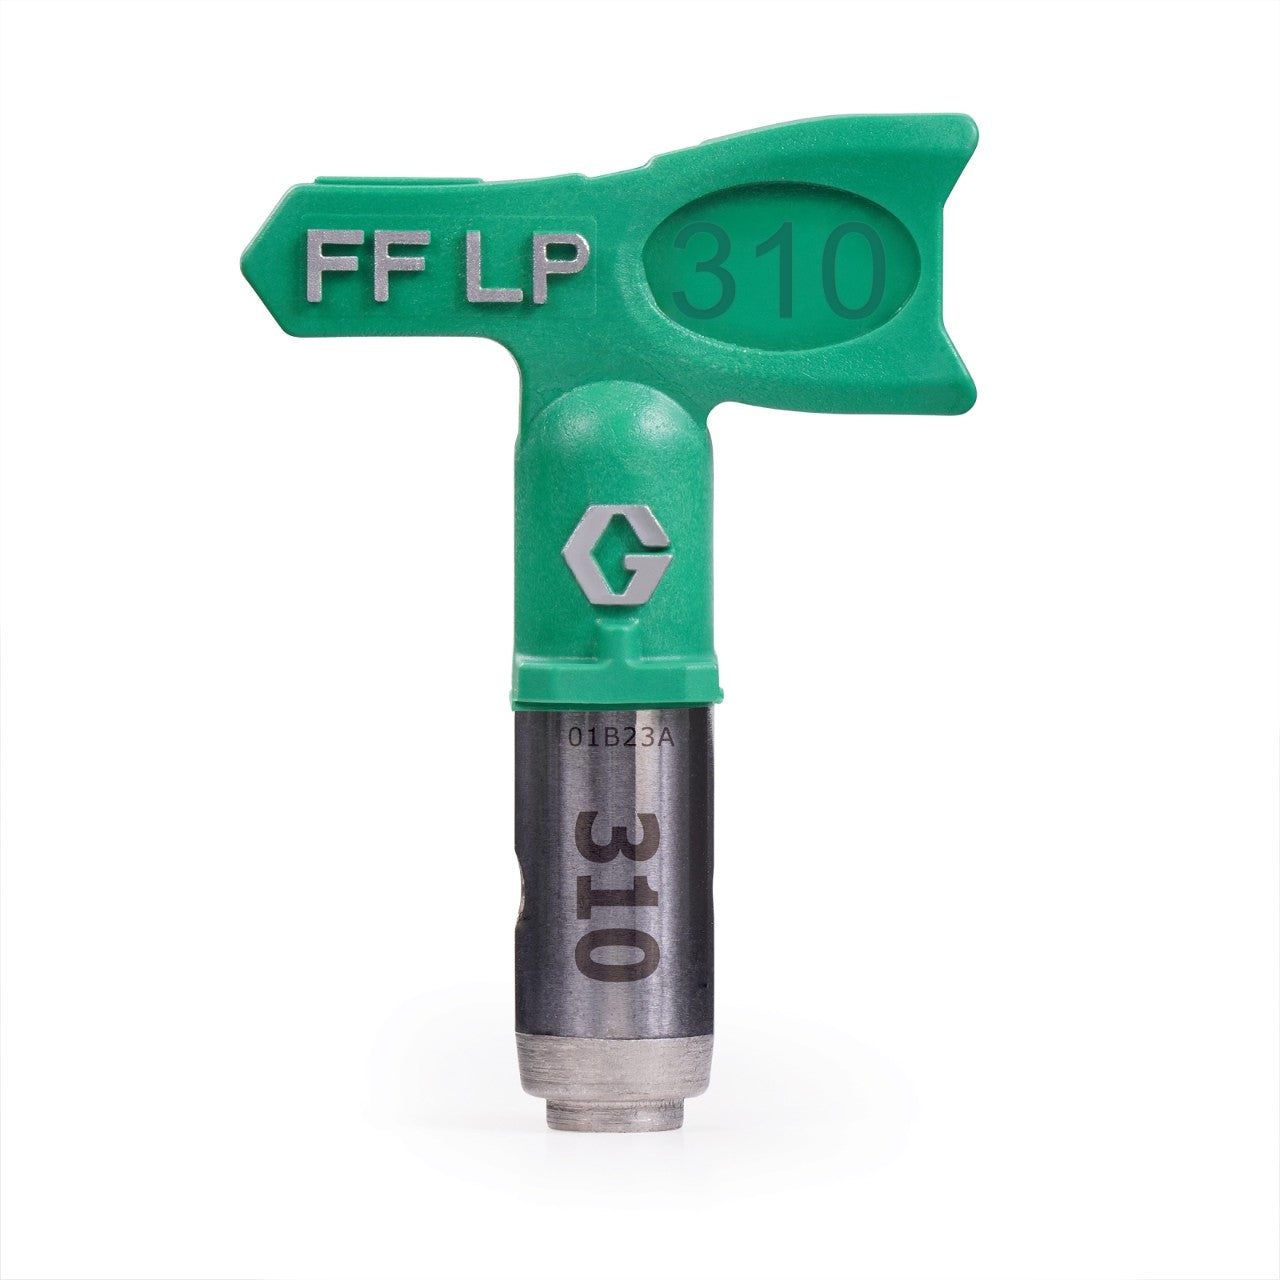 Graco FFLP-310 Tip